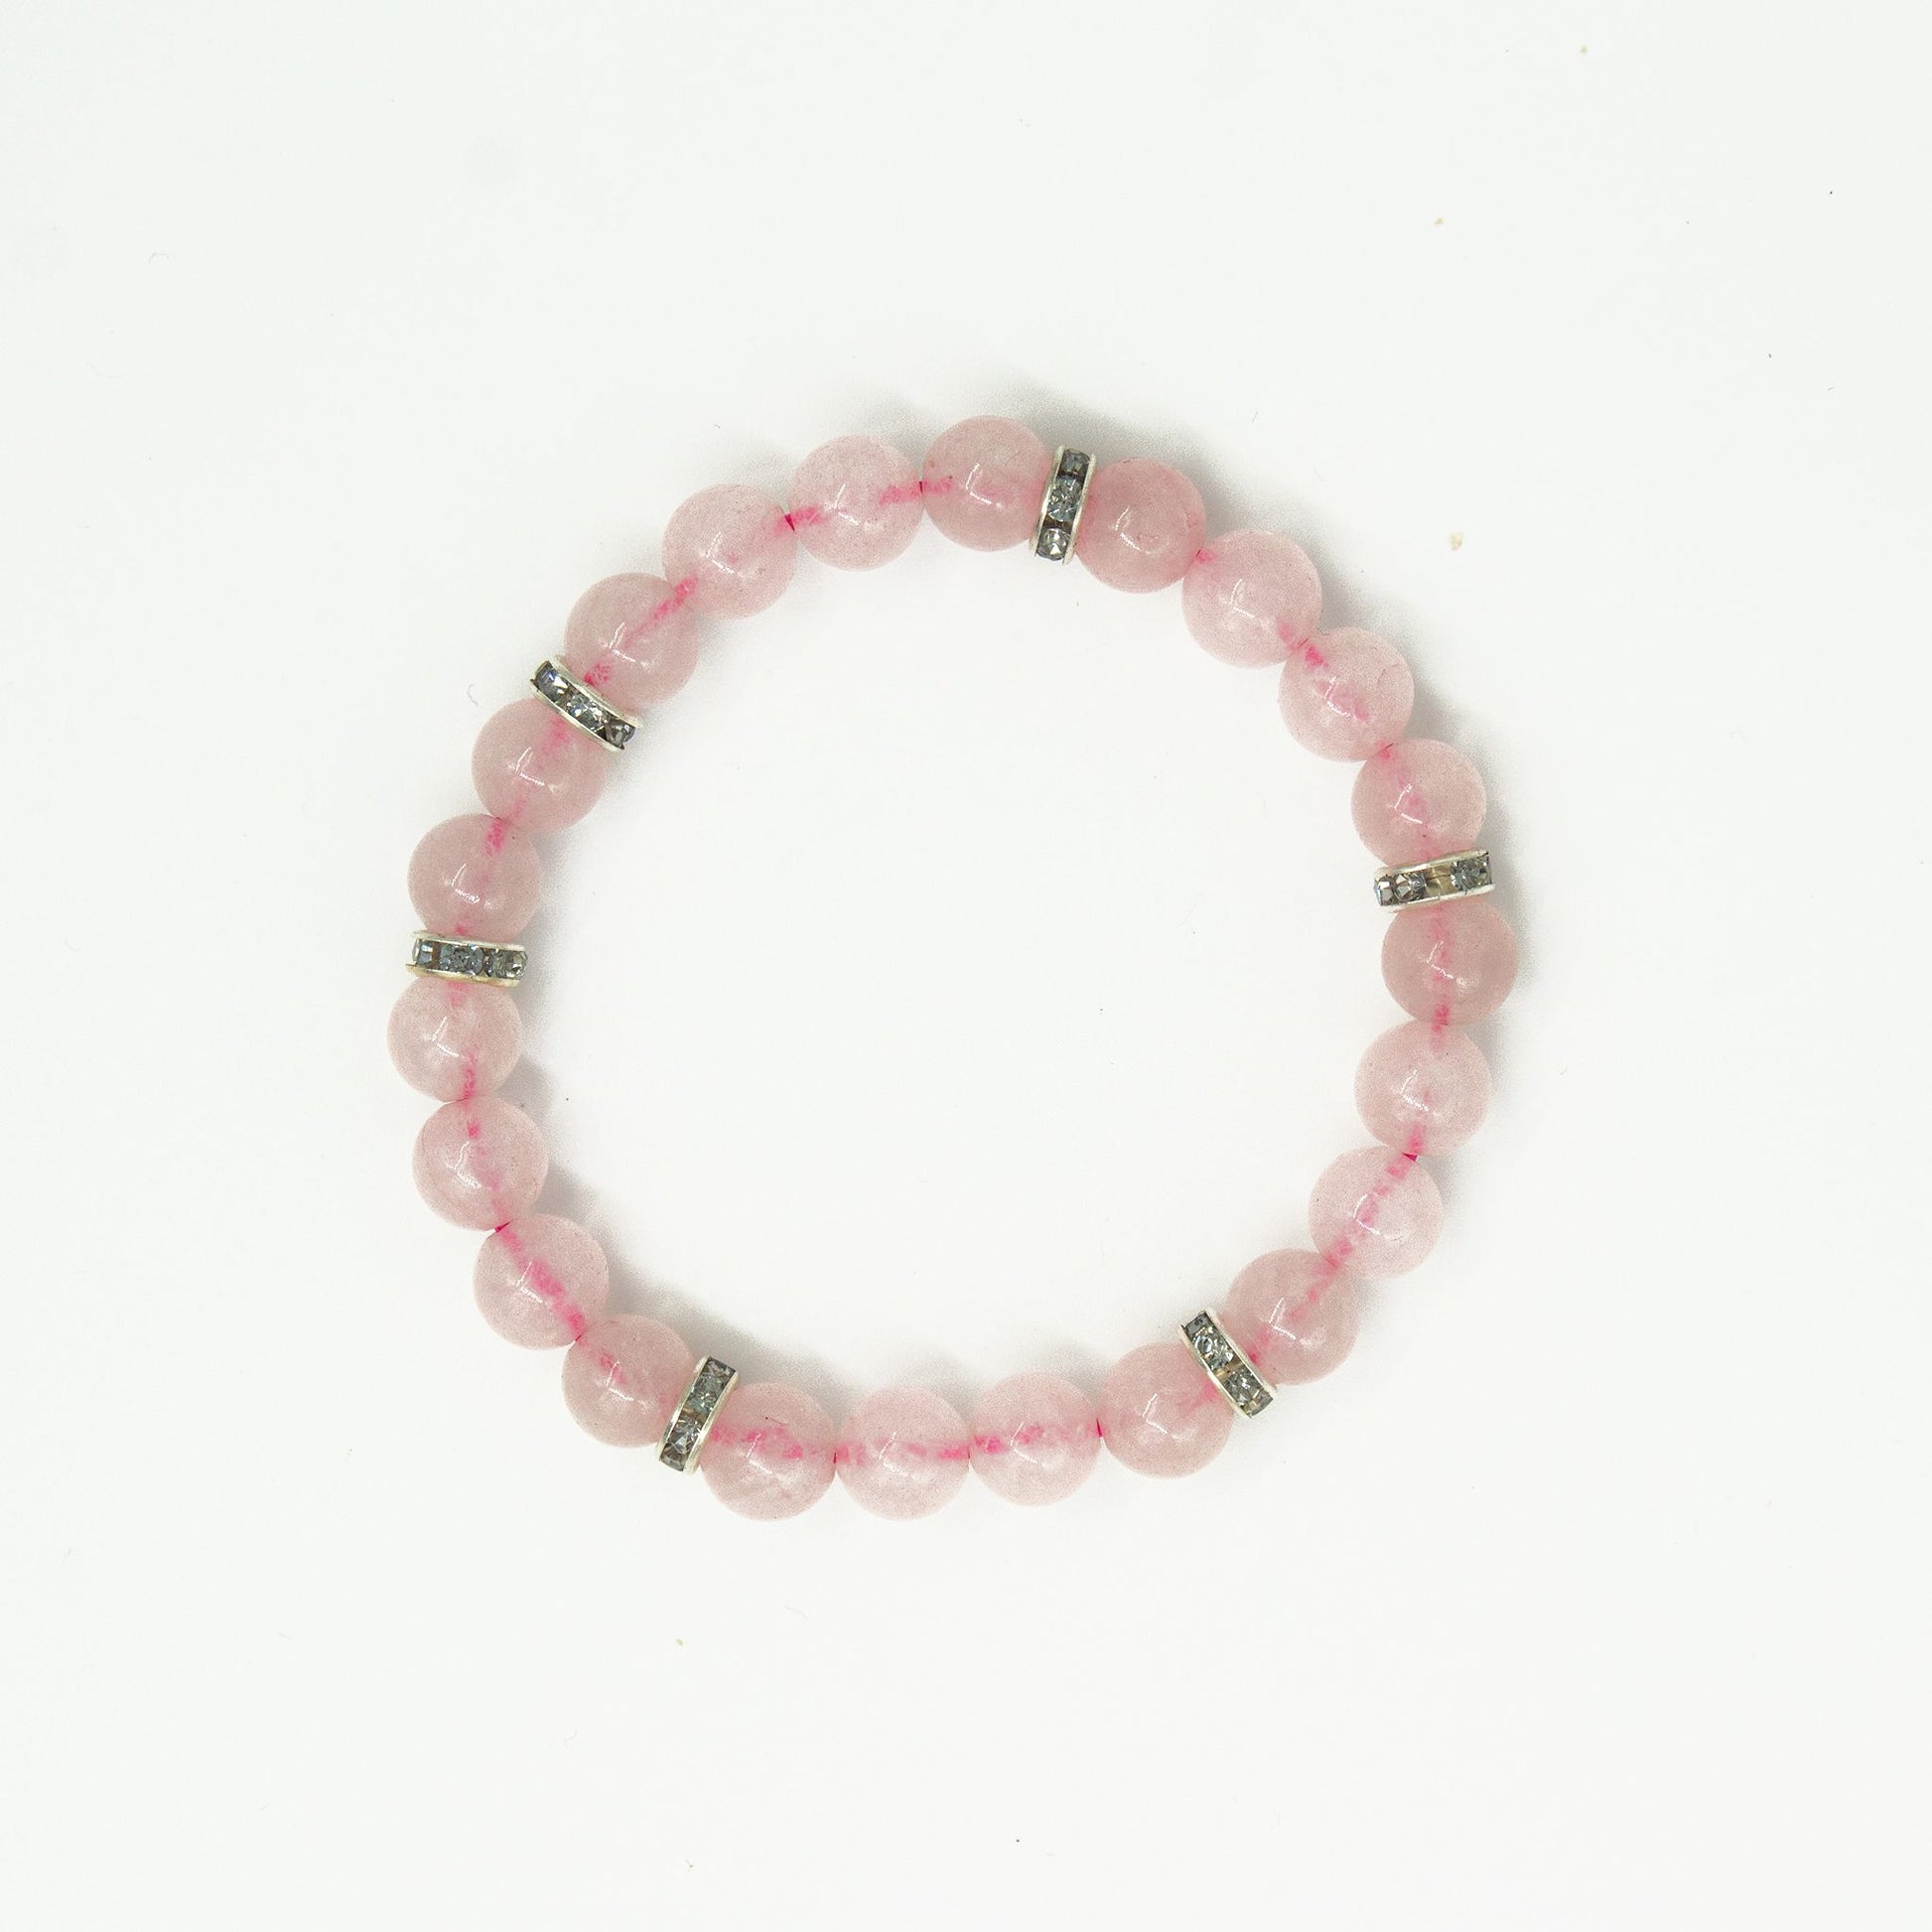 Rose-quartz-bracelet-with-charms